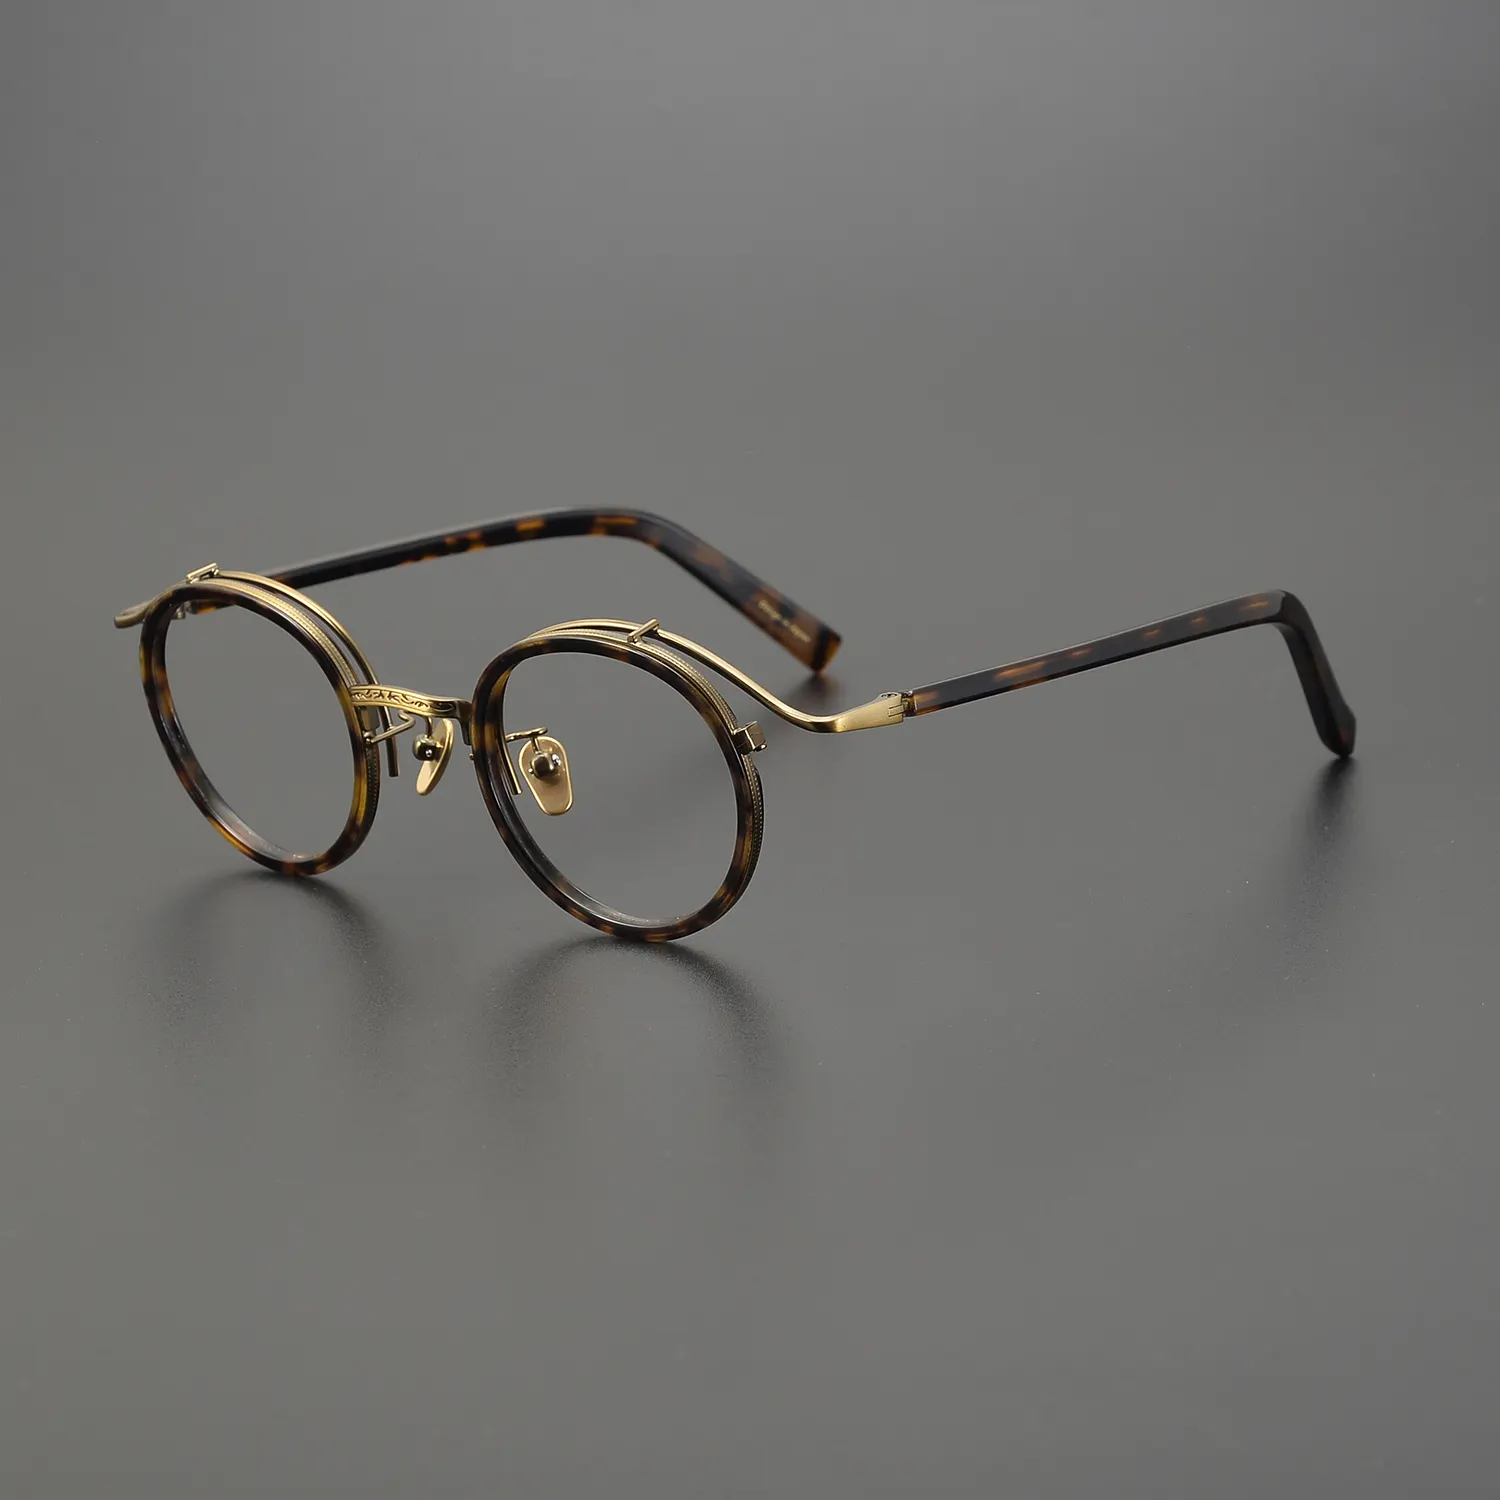 Kmn1110 100% 最高品質の手作り光学眼鏡フレーム丸山正洋メガネ純チタン高級眼鏡フレーム